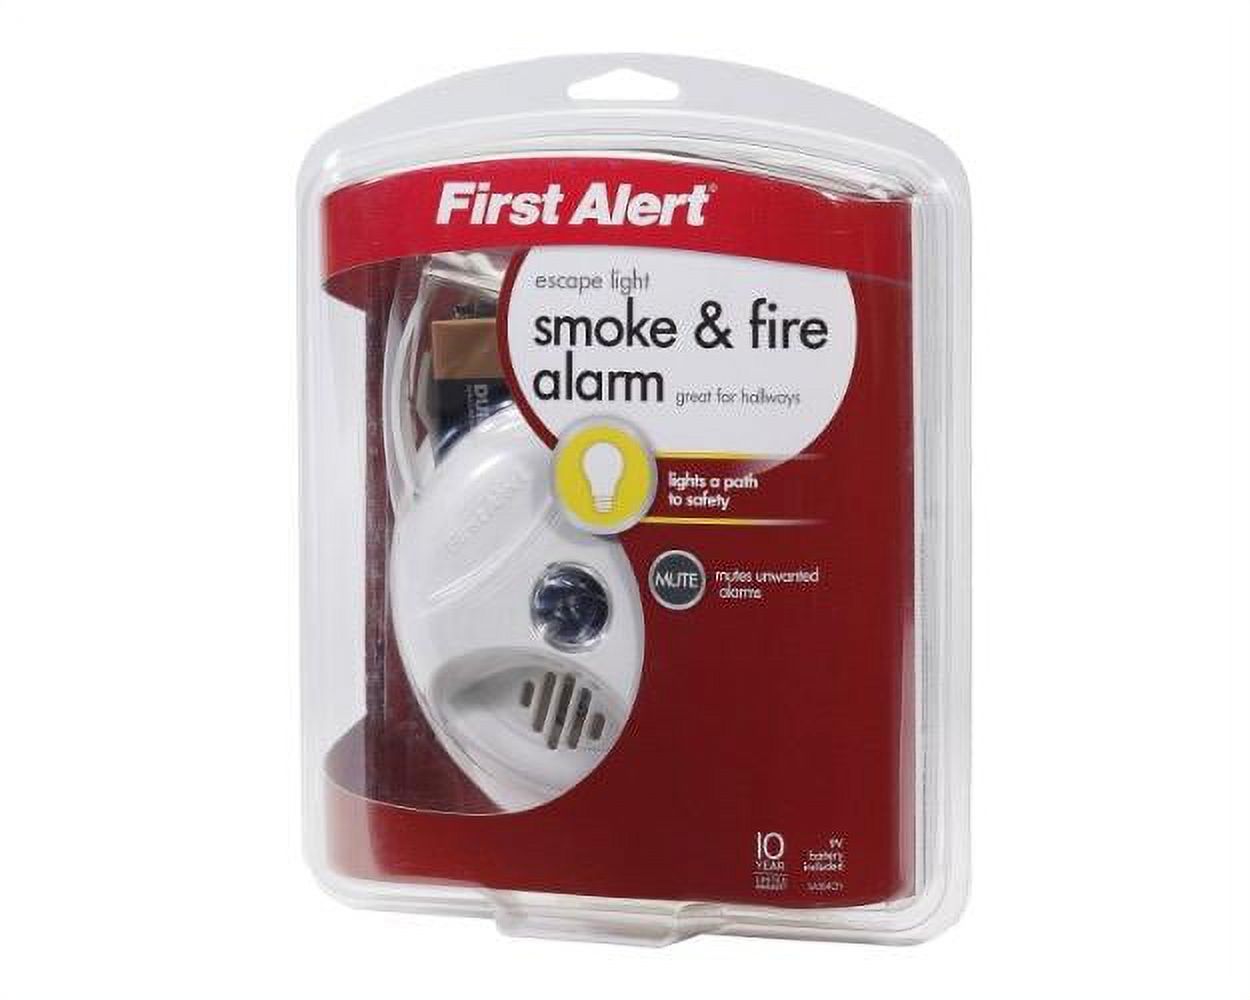 First Alert SA304CN3 Smoke Alarm (Escape Light) - image 4 of 5